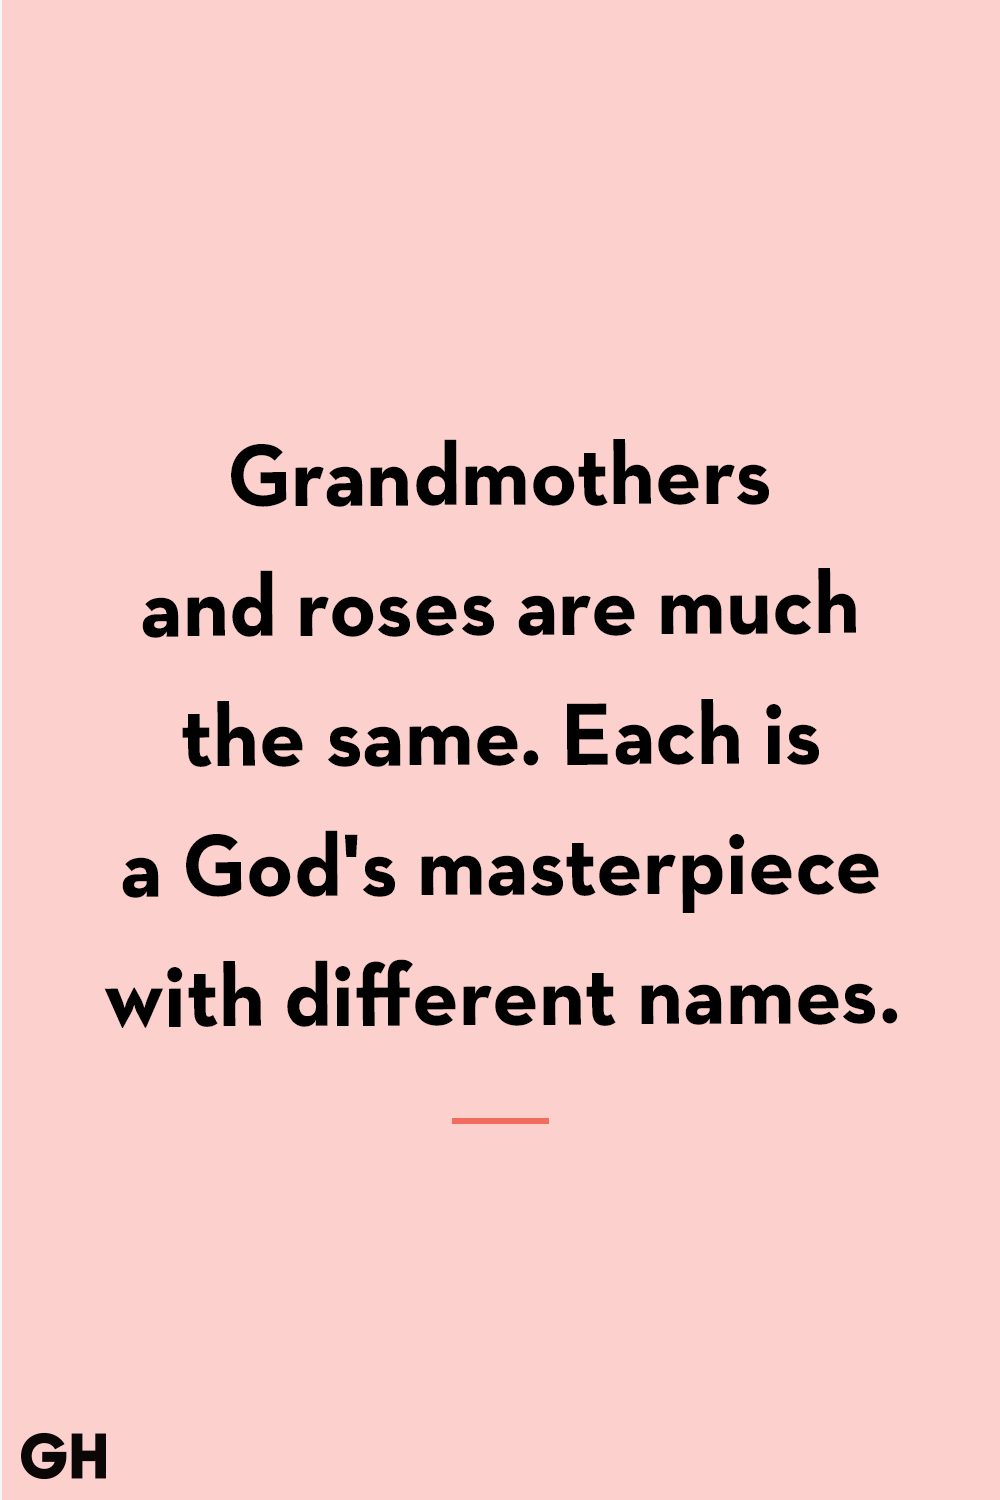 grandma quotes and sayings